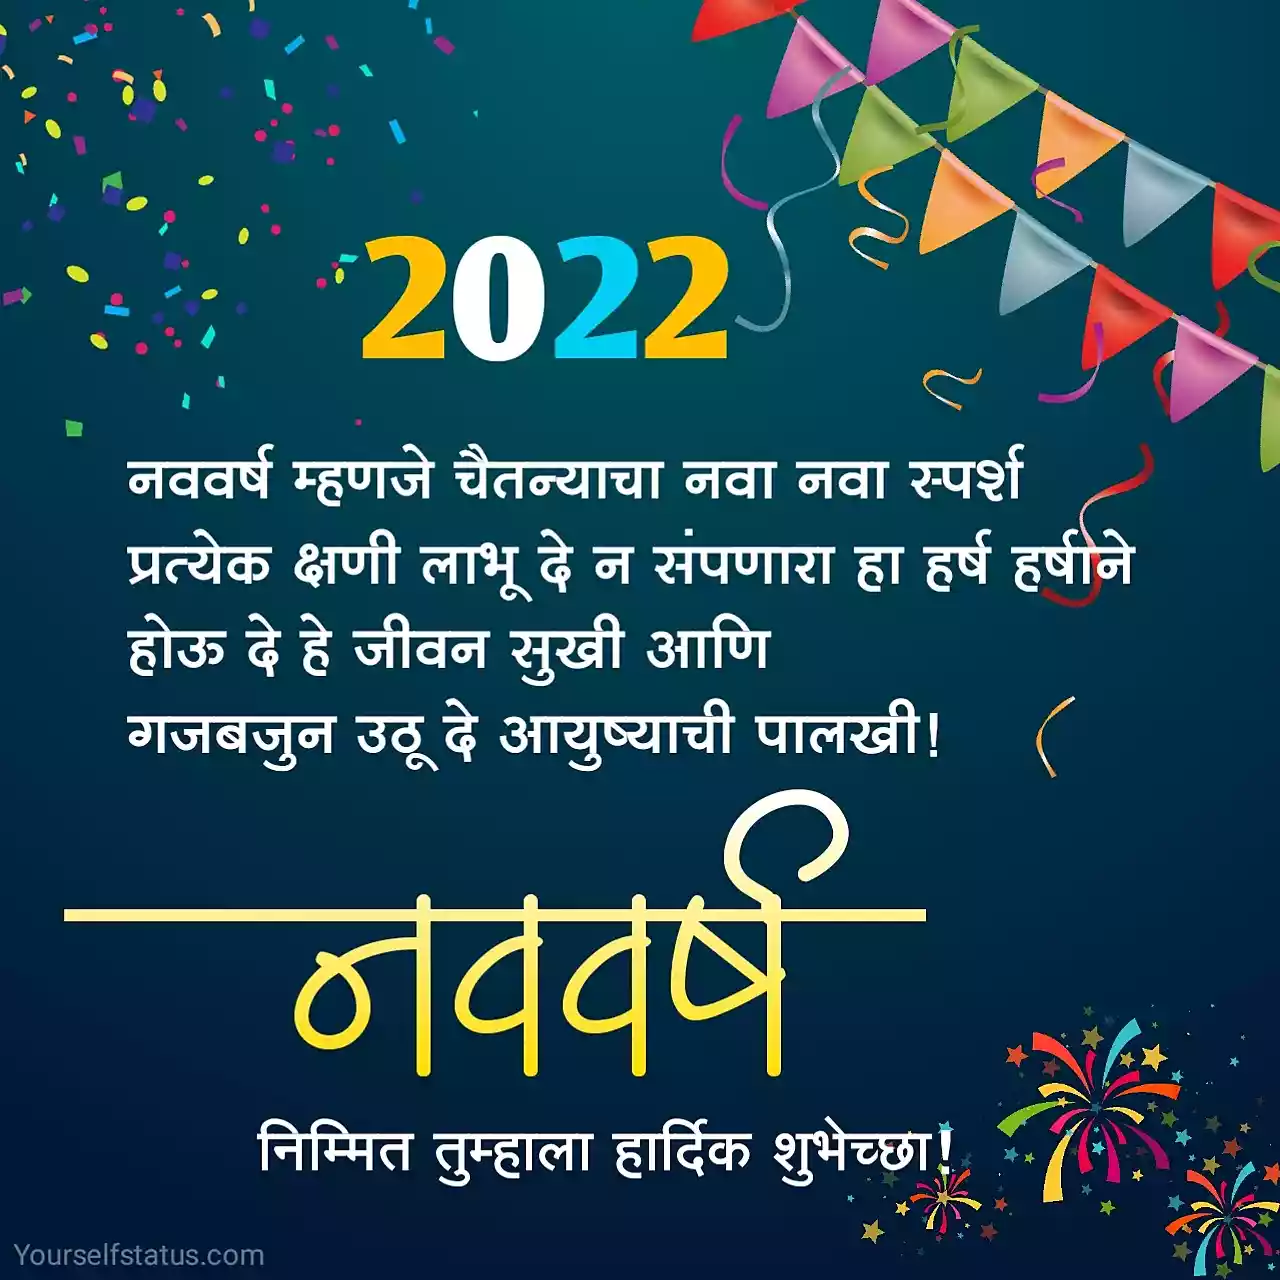 Happy new year status in marathi